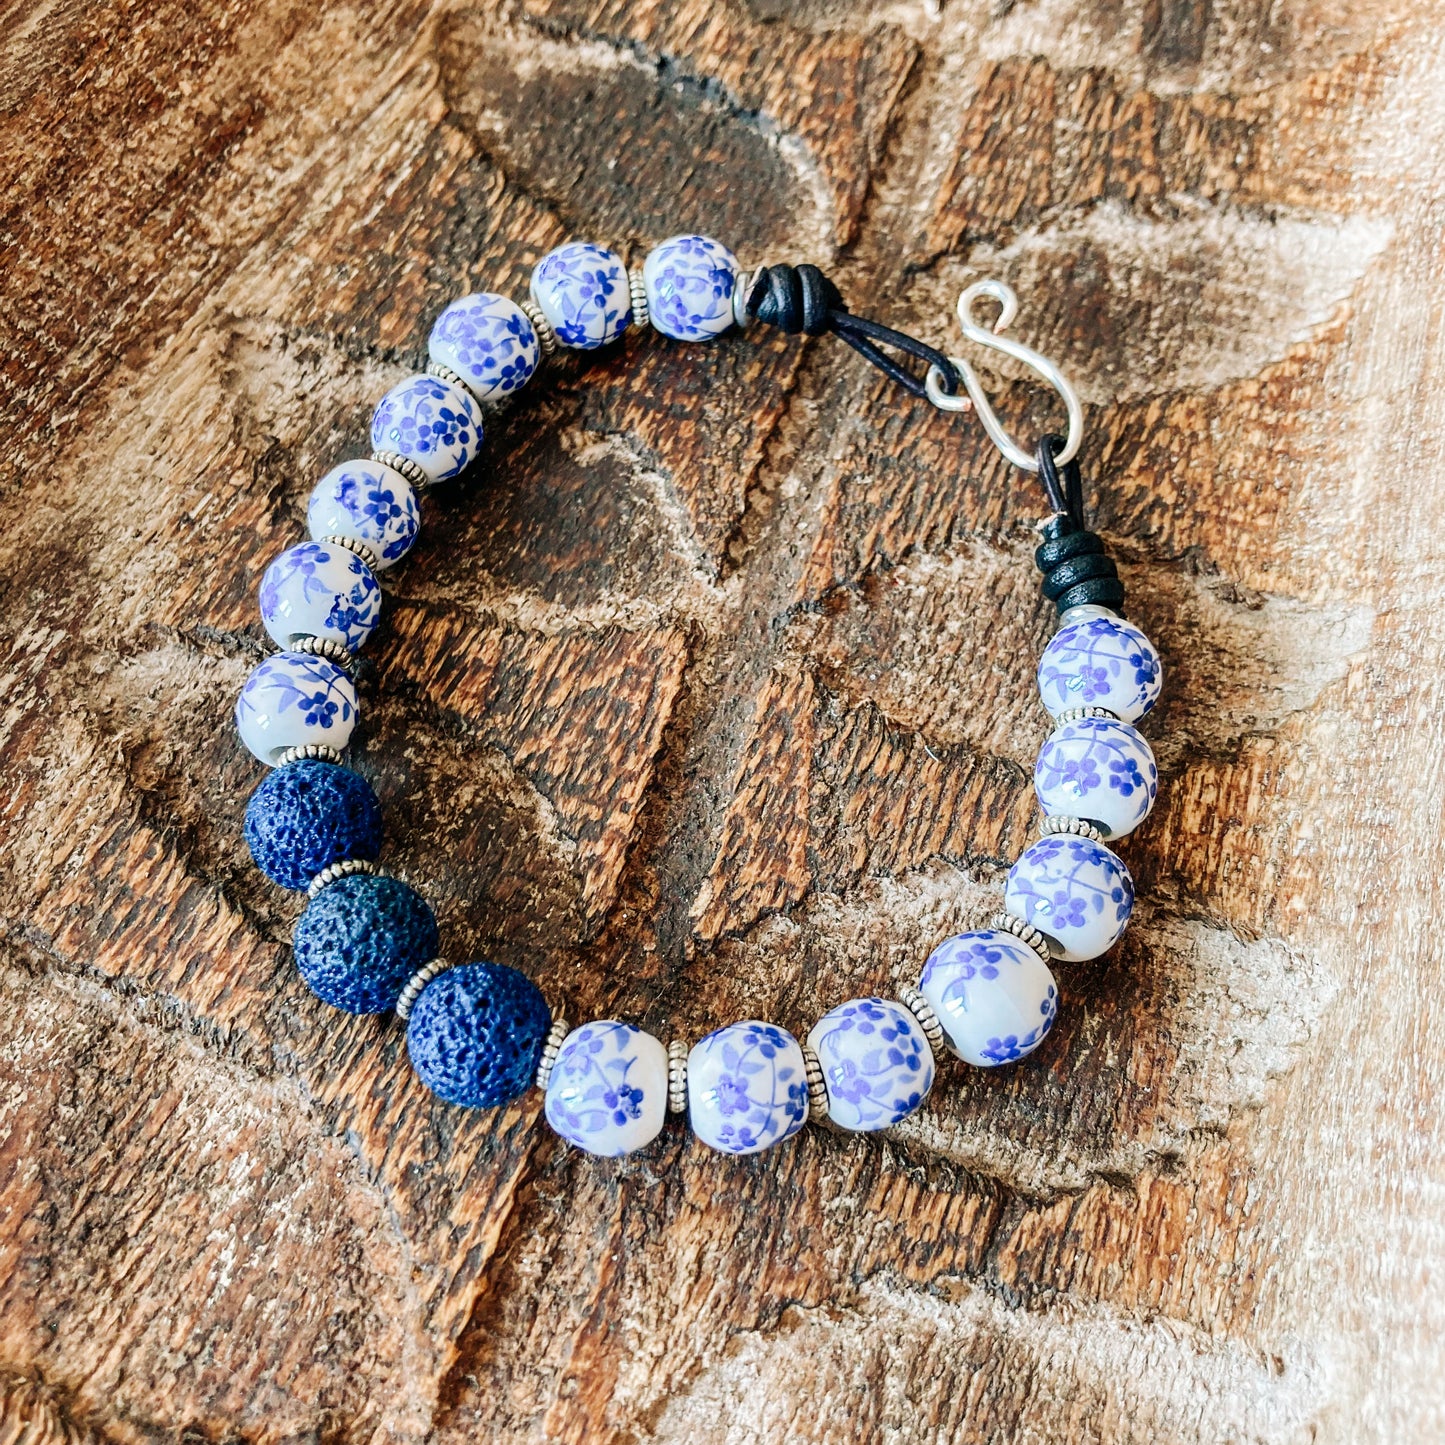 Blue/White Lava Rock Bracelet